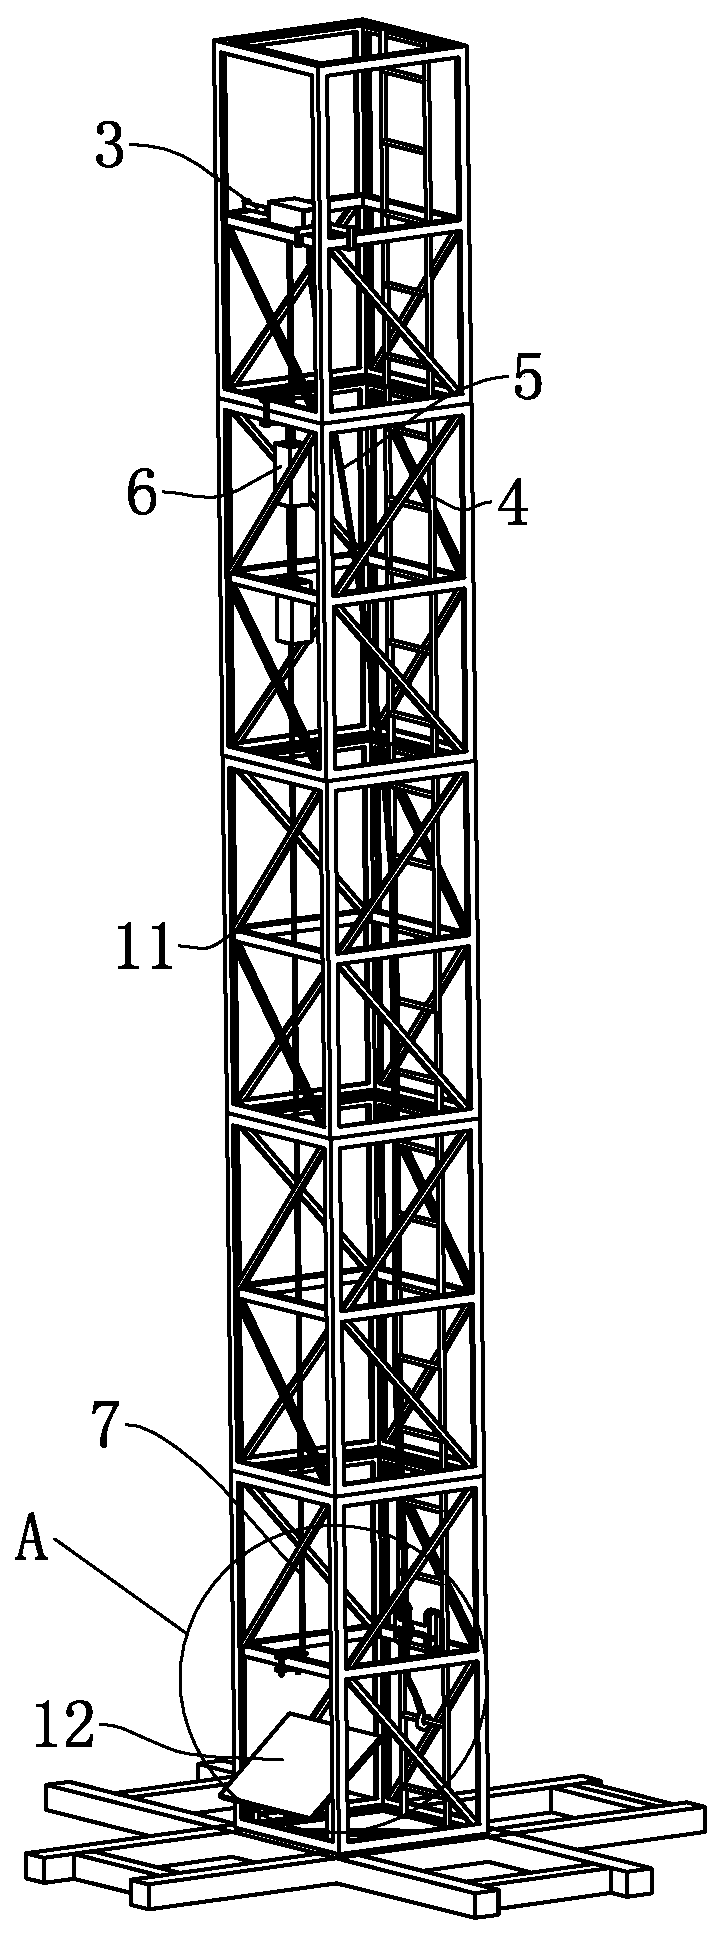 Tower crane climbing system